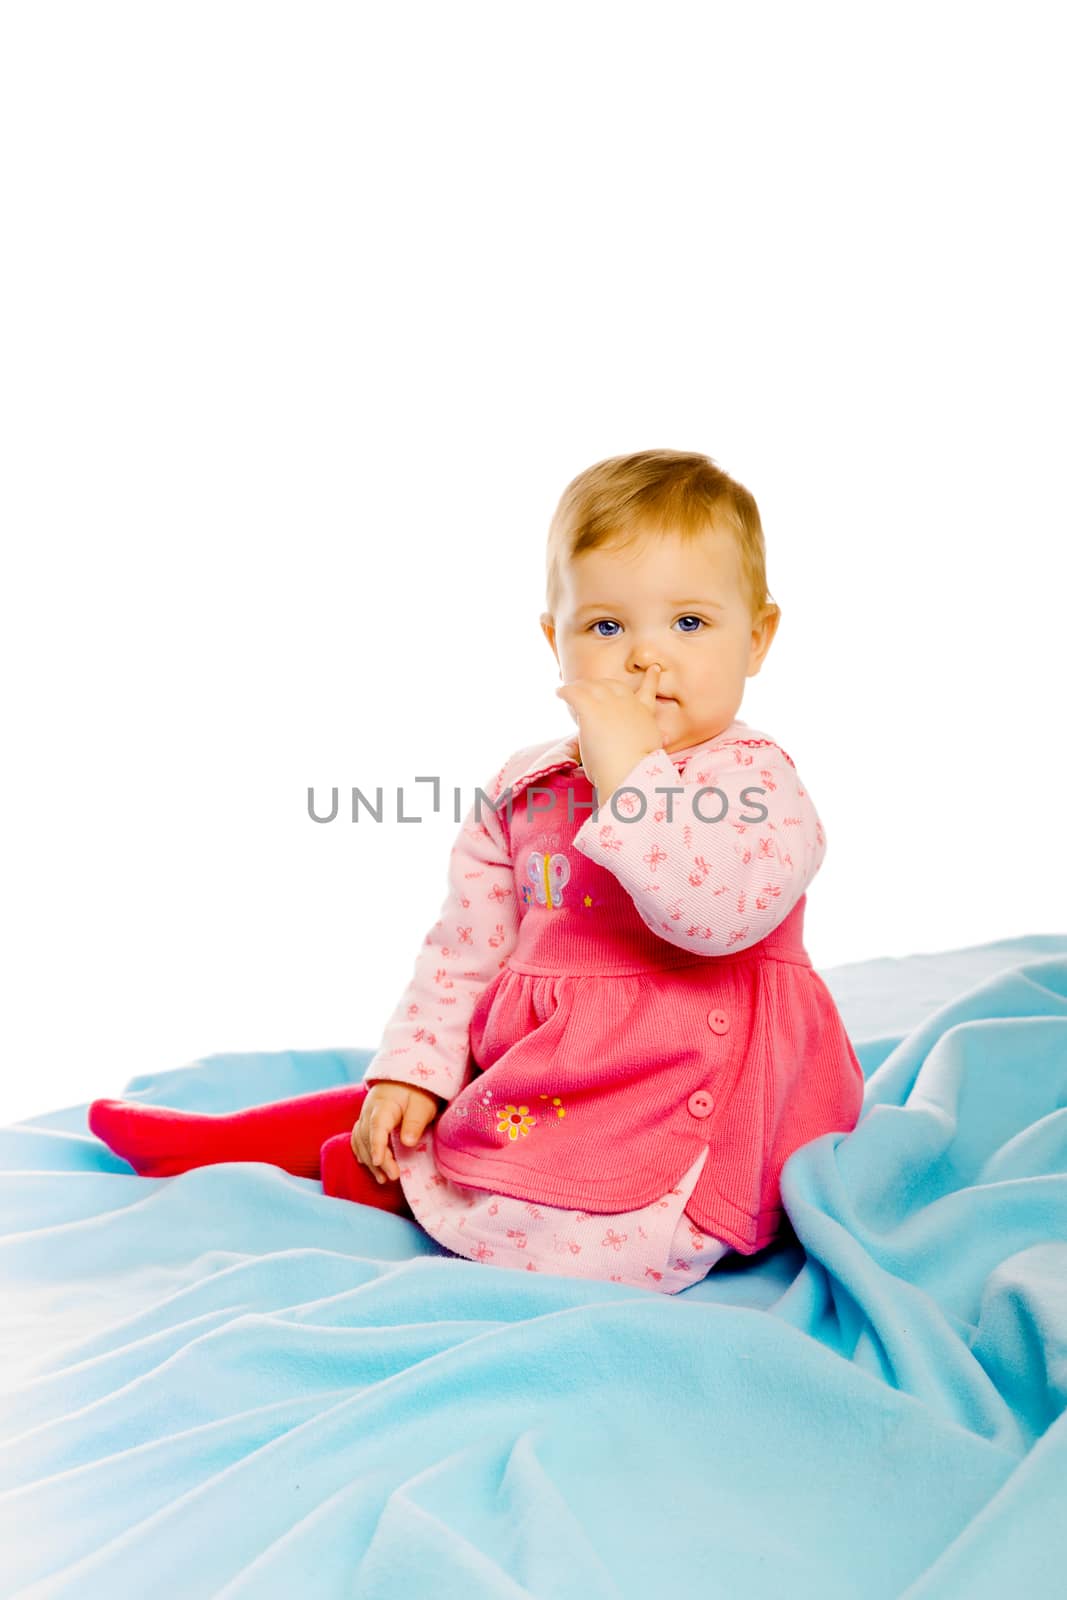 Beautiful baby girl sitting on a blue blanket. Studio